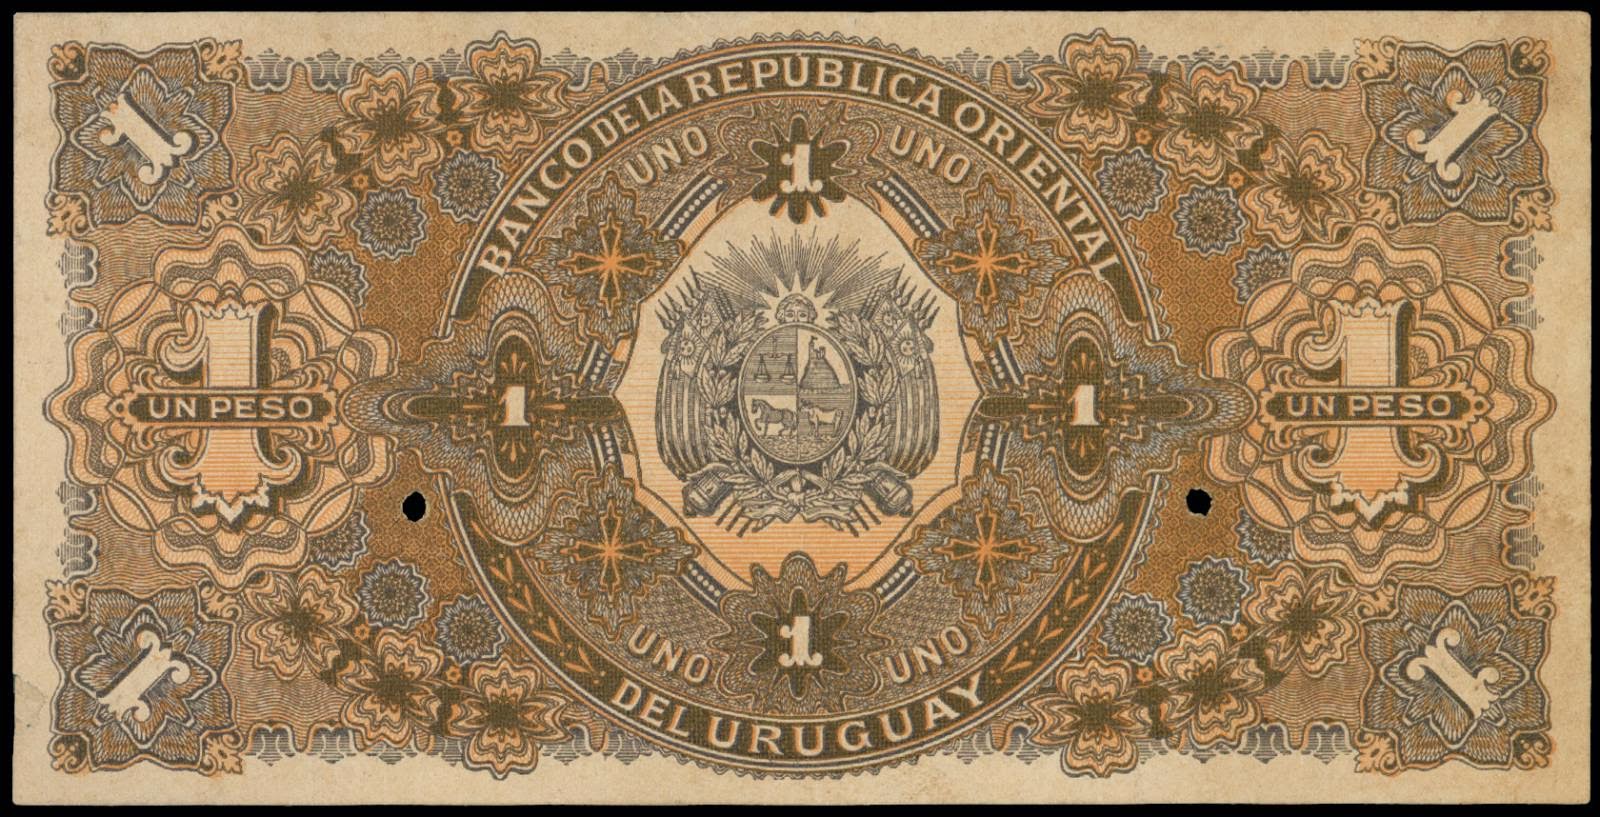 Uruguay One Peso banknote 1896